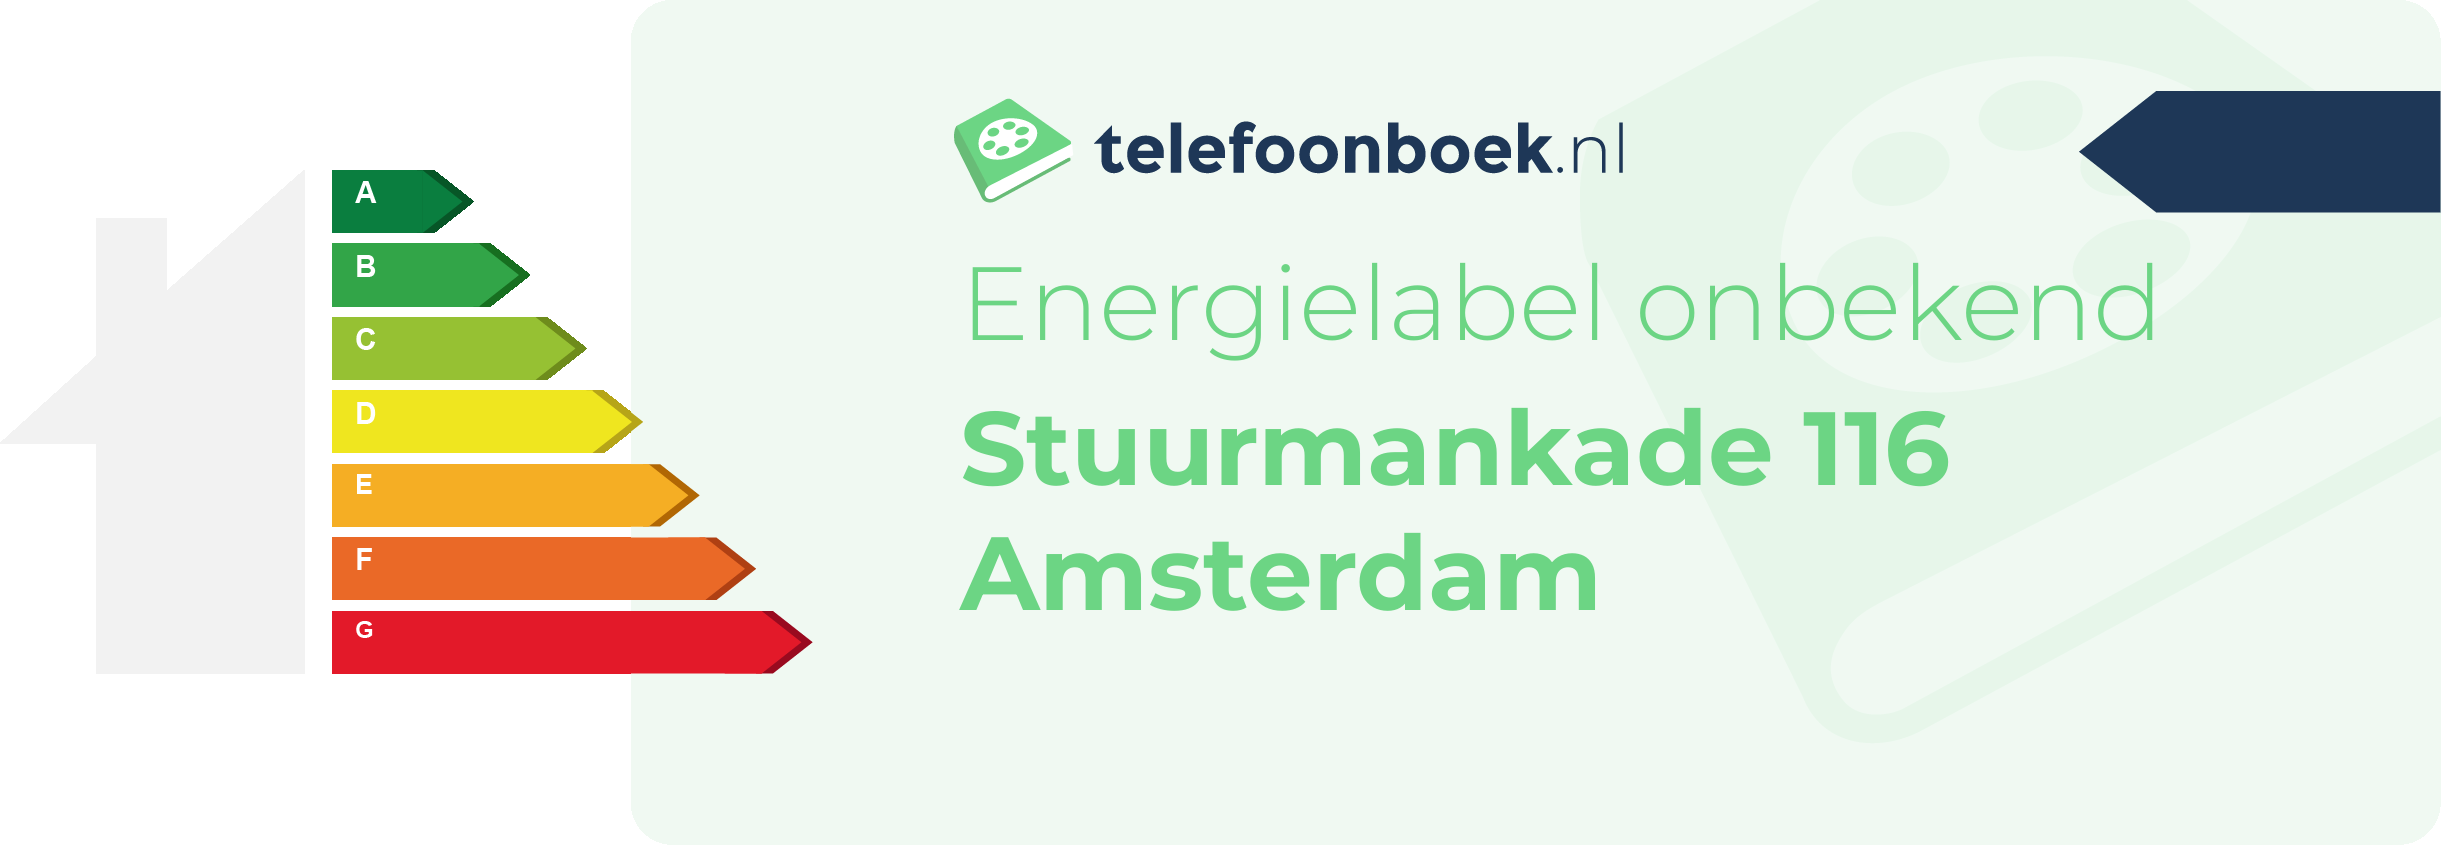 Energielabel Stuurmankade 116 Amsterdam